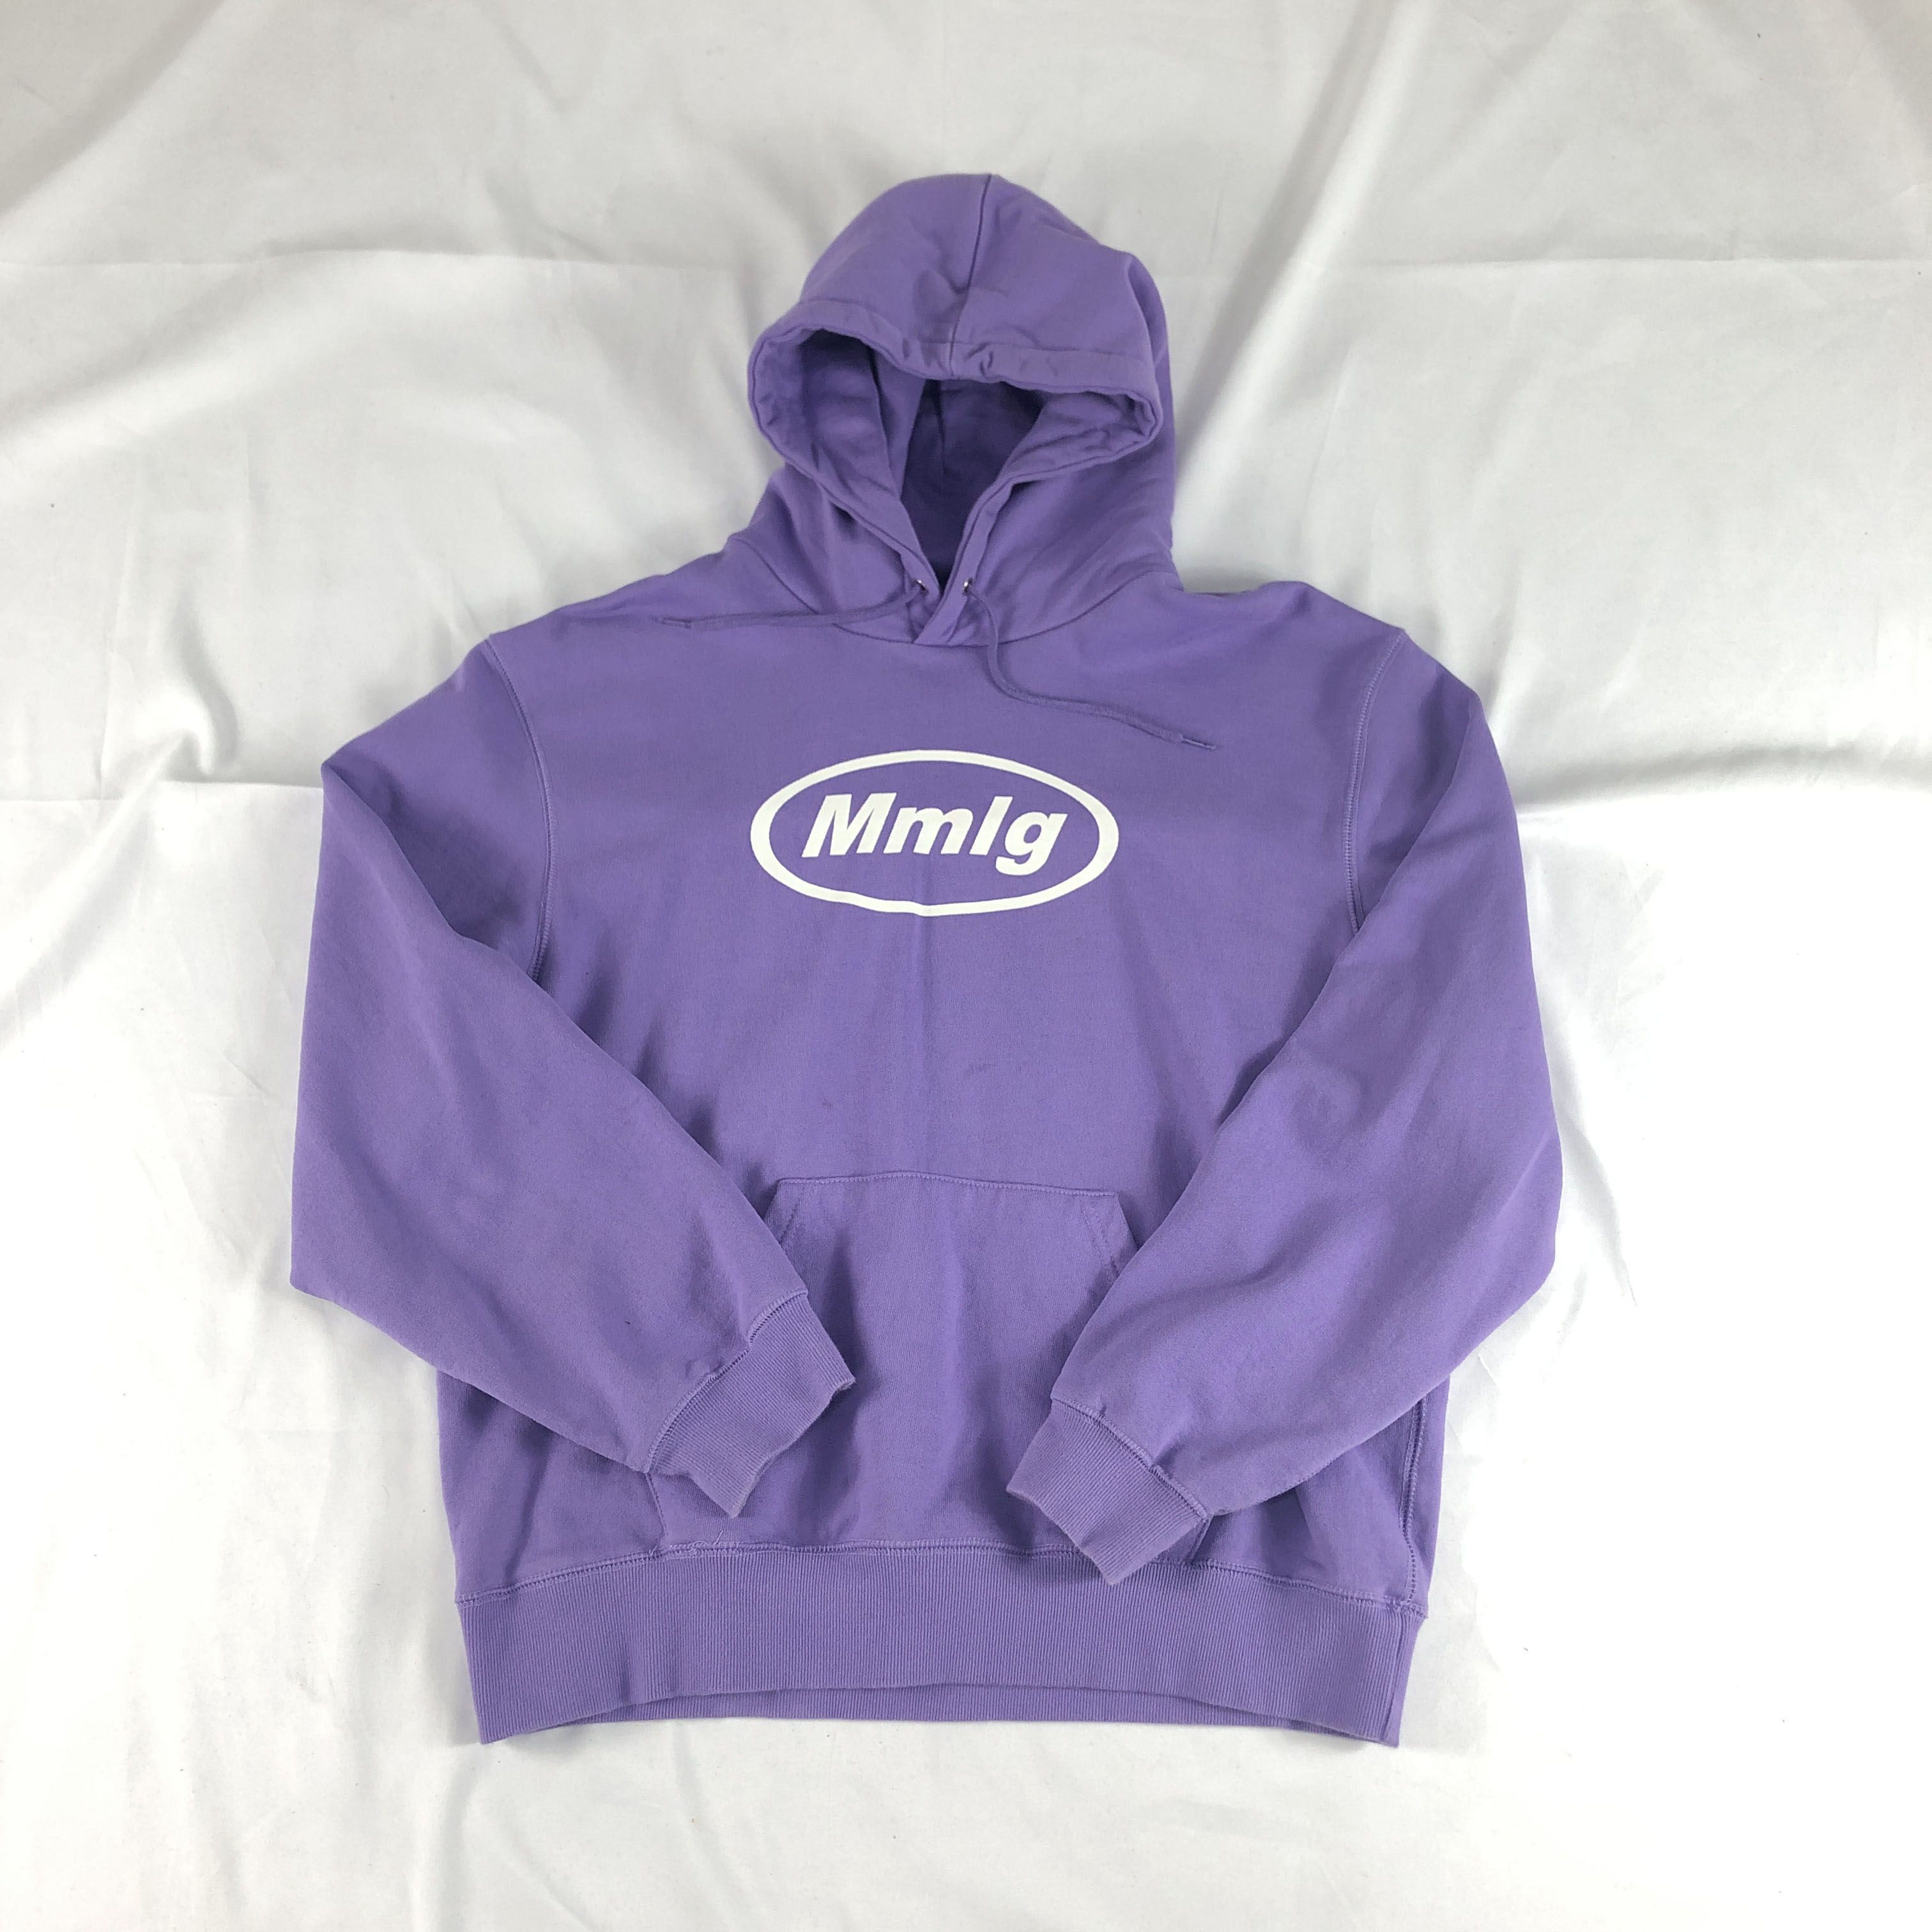 [MMLG] Purple Hoodie - Size M